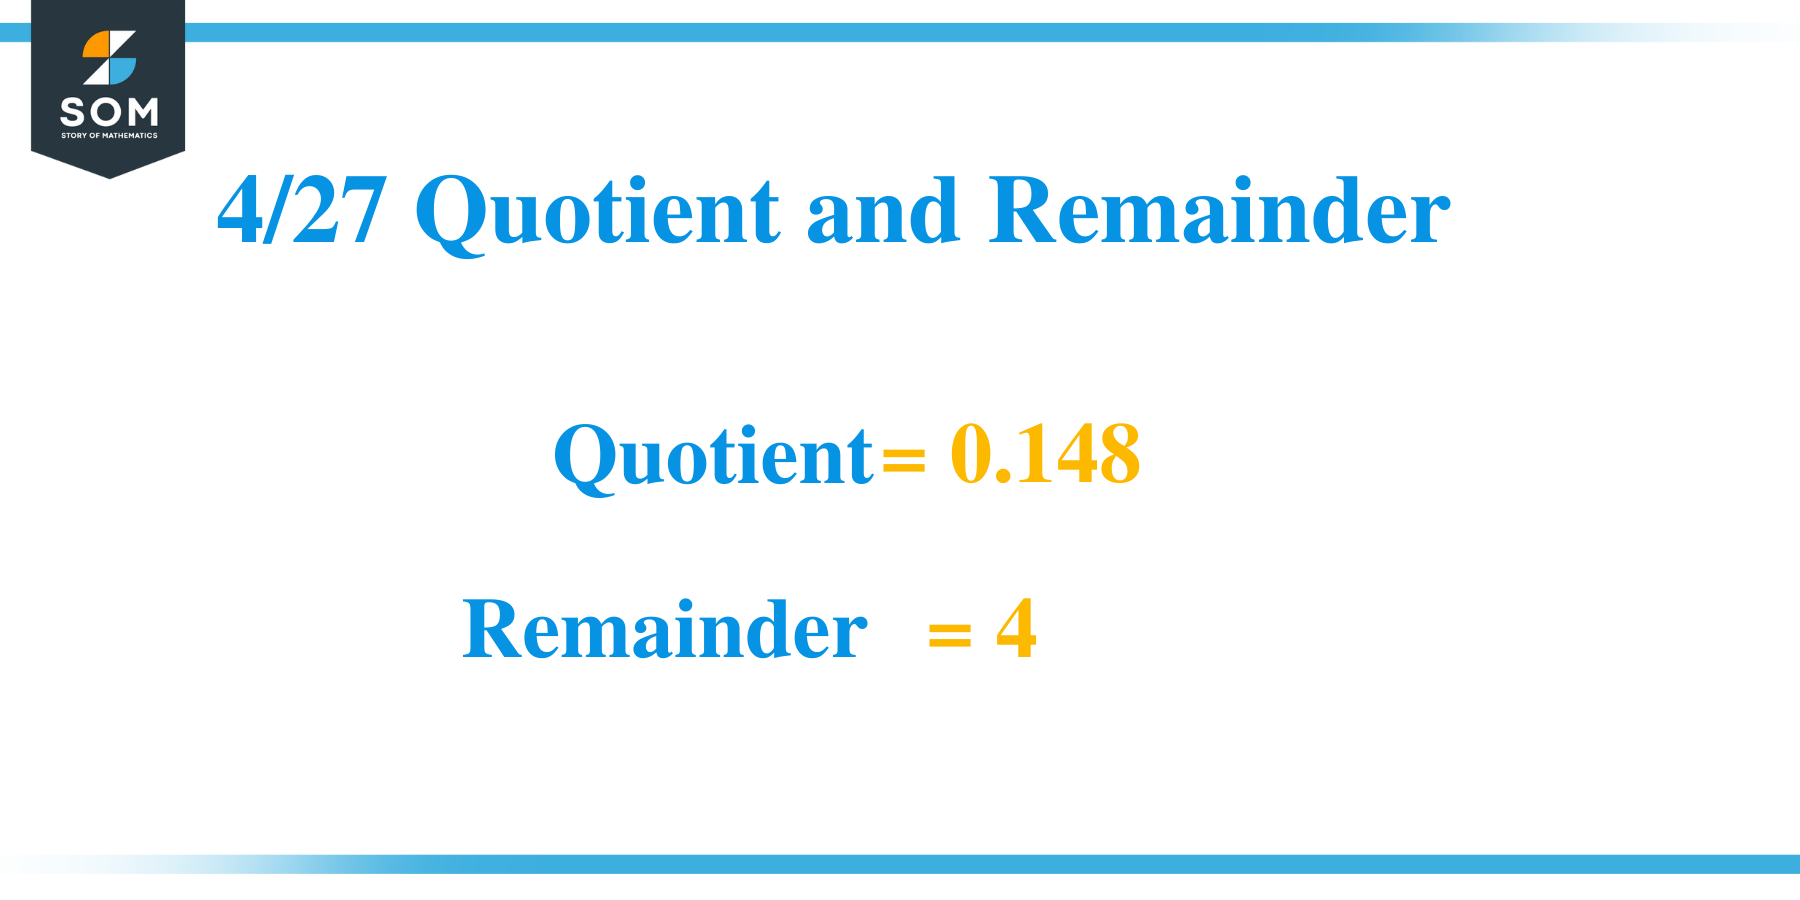 4_27 Quotient and Remainder